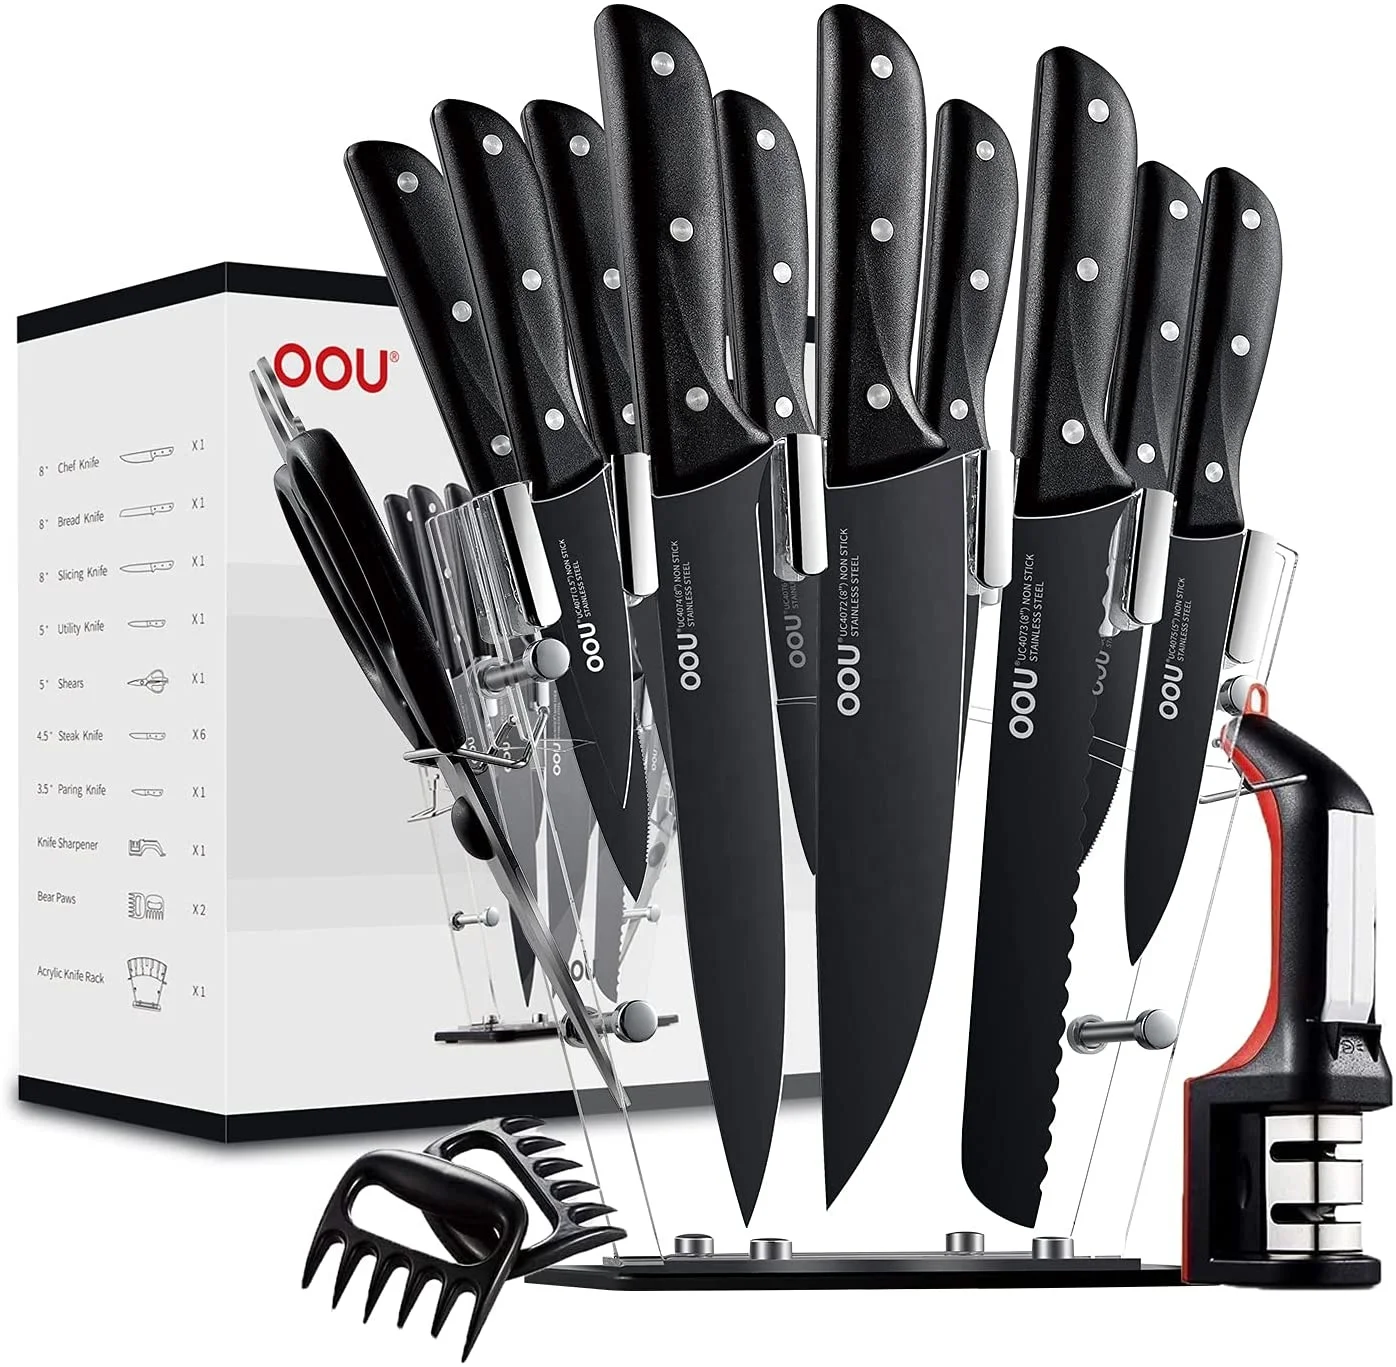 

BO TECH Ultra Sharp Black Chef Series 15pcs Kitchen Knife Set Stainless Steel Design with Sharpener